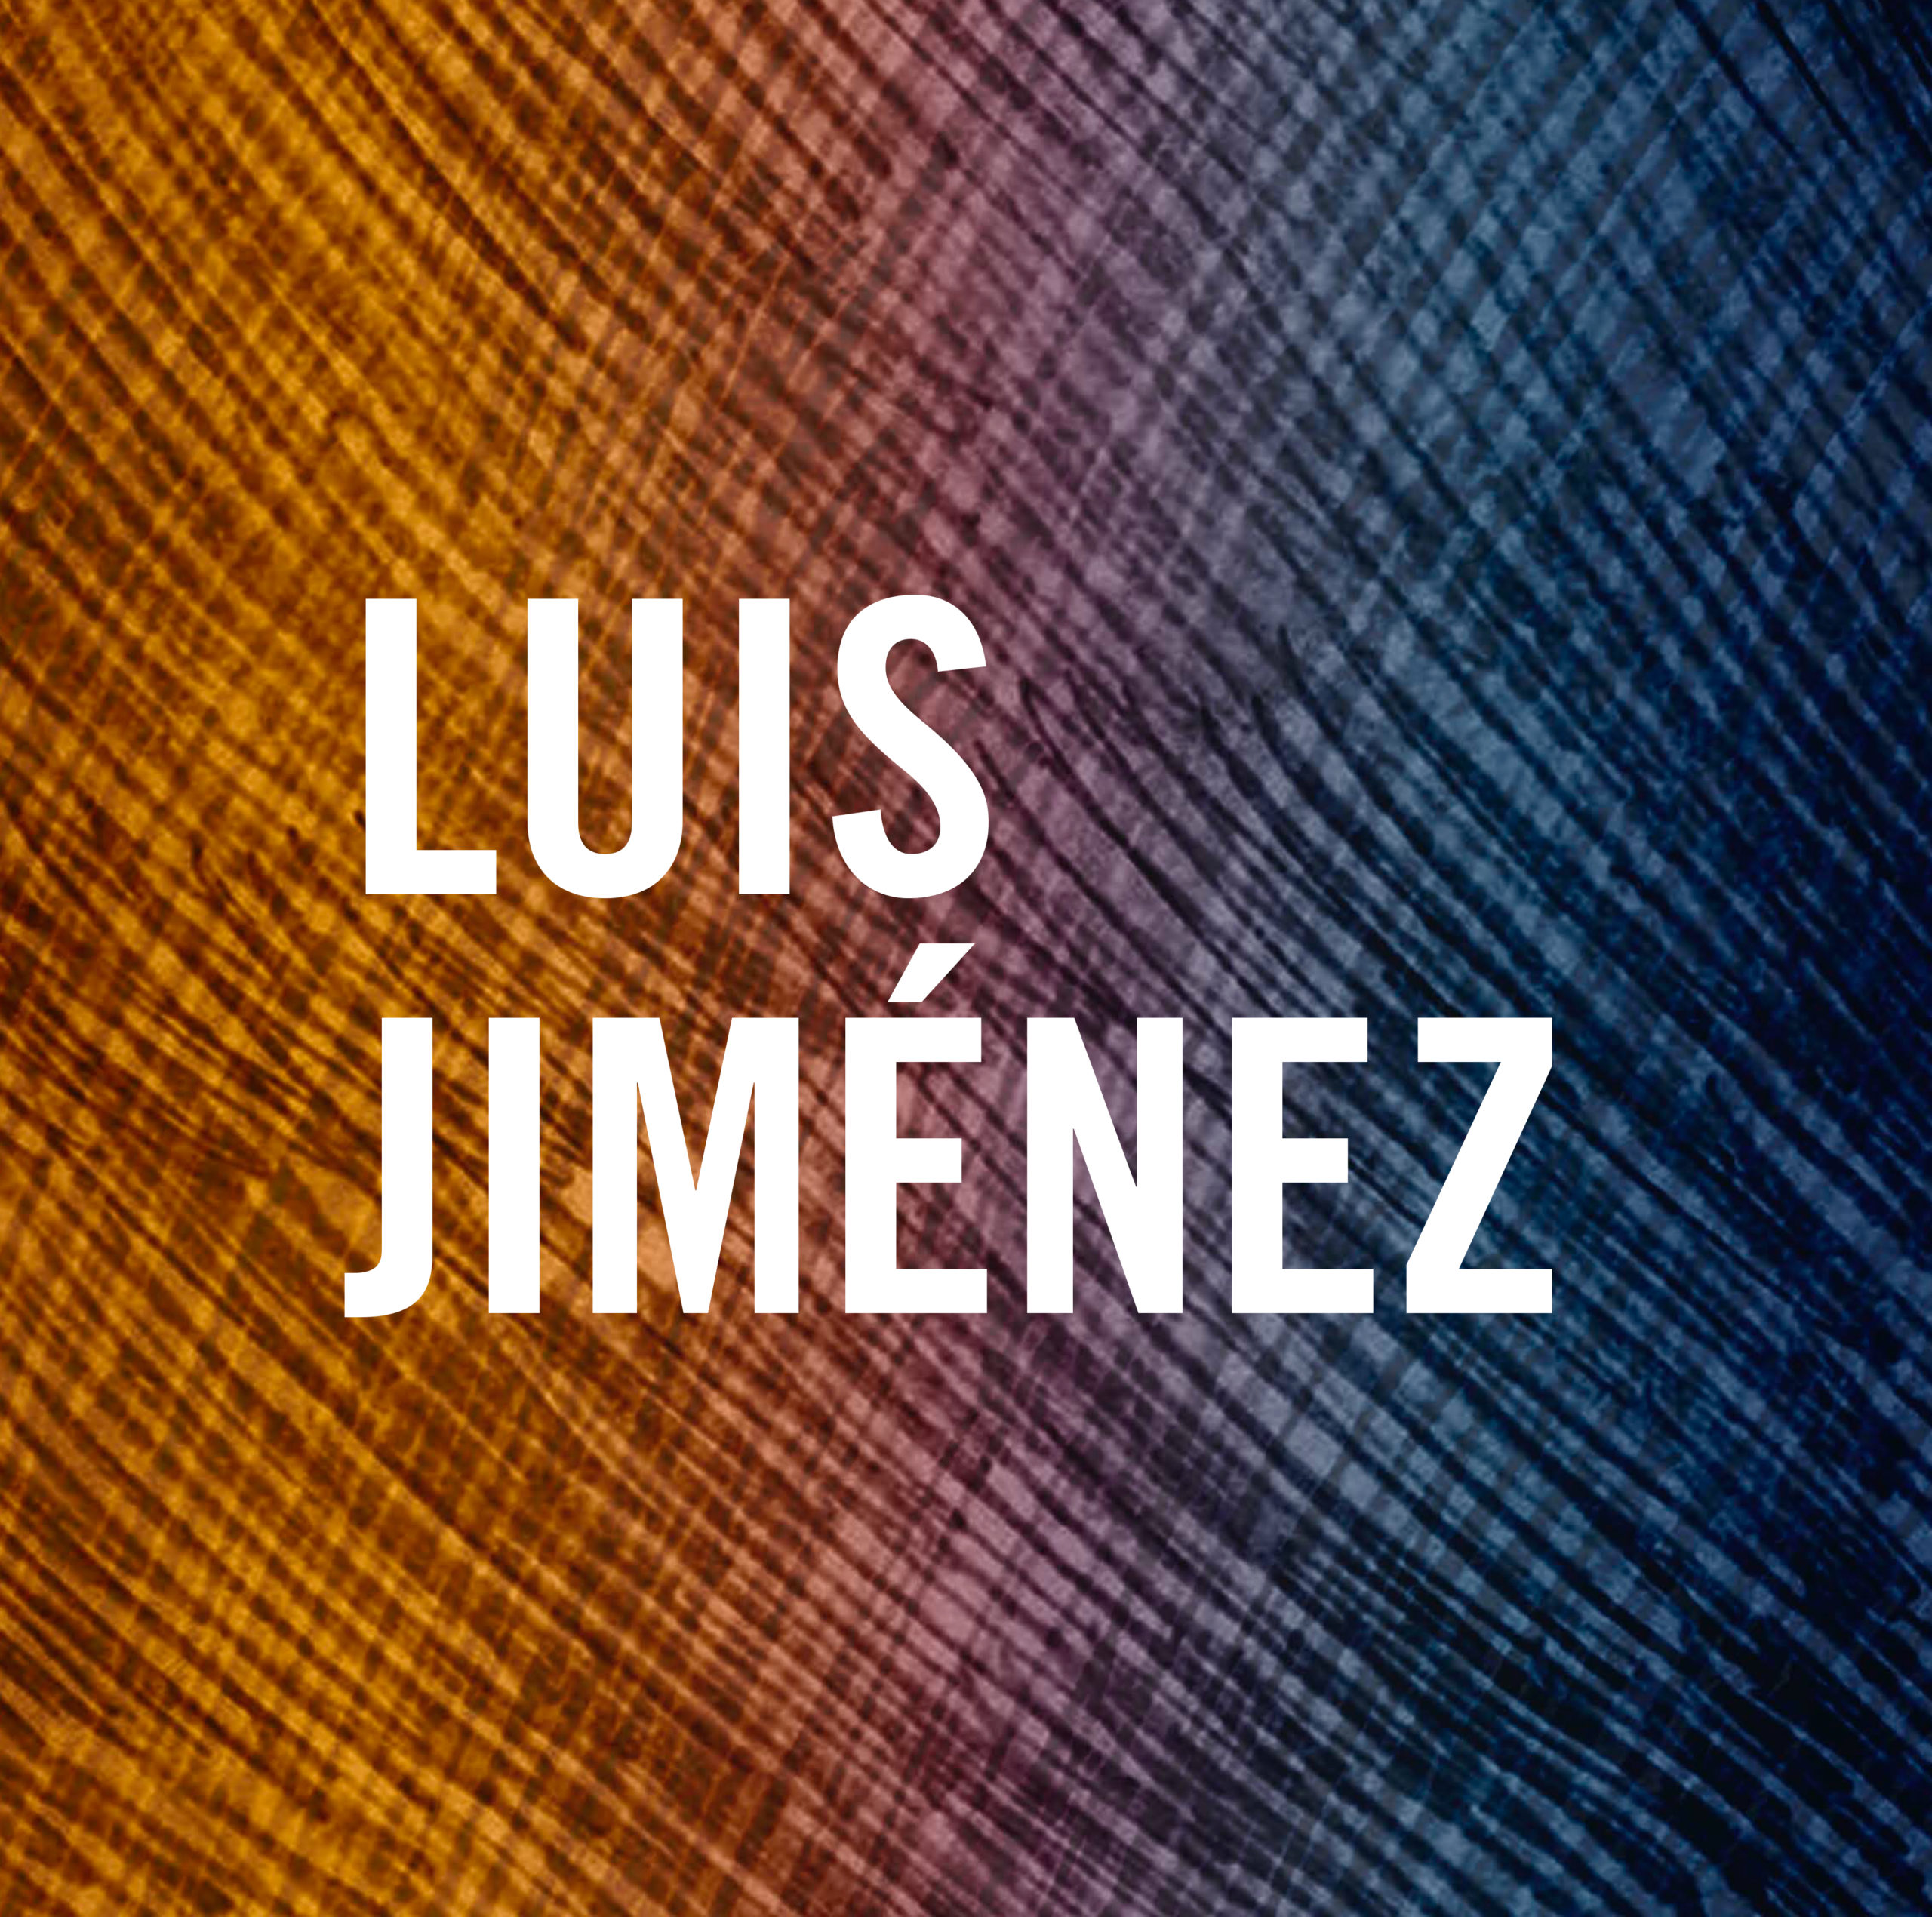 

											Luis Jimenez</b>

											<em>
												Luis Jimenez</em> 

											<h4>
												May 21 - July 31											</h4>

		                																																																																																	
		                				